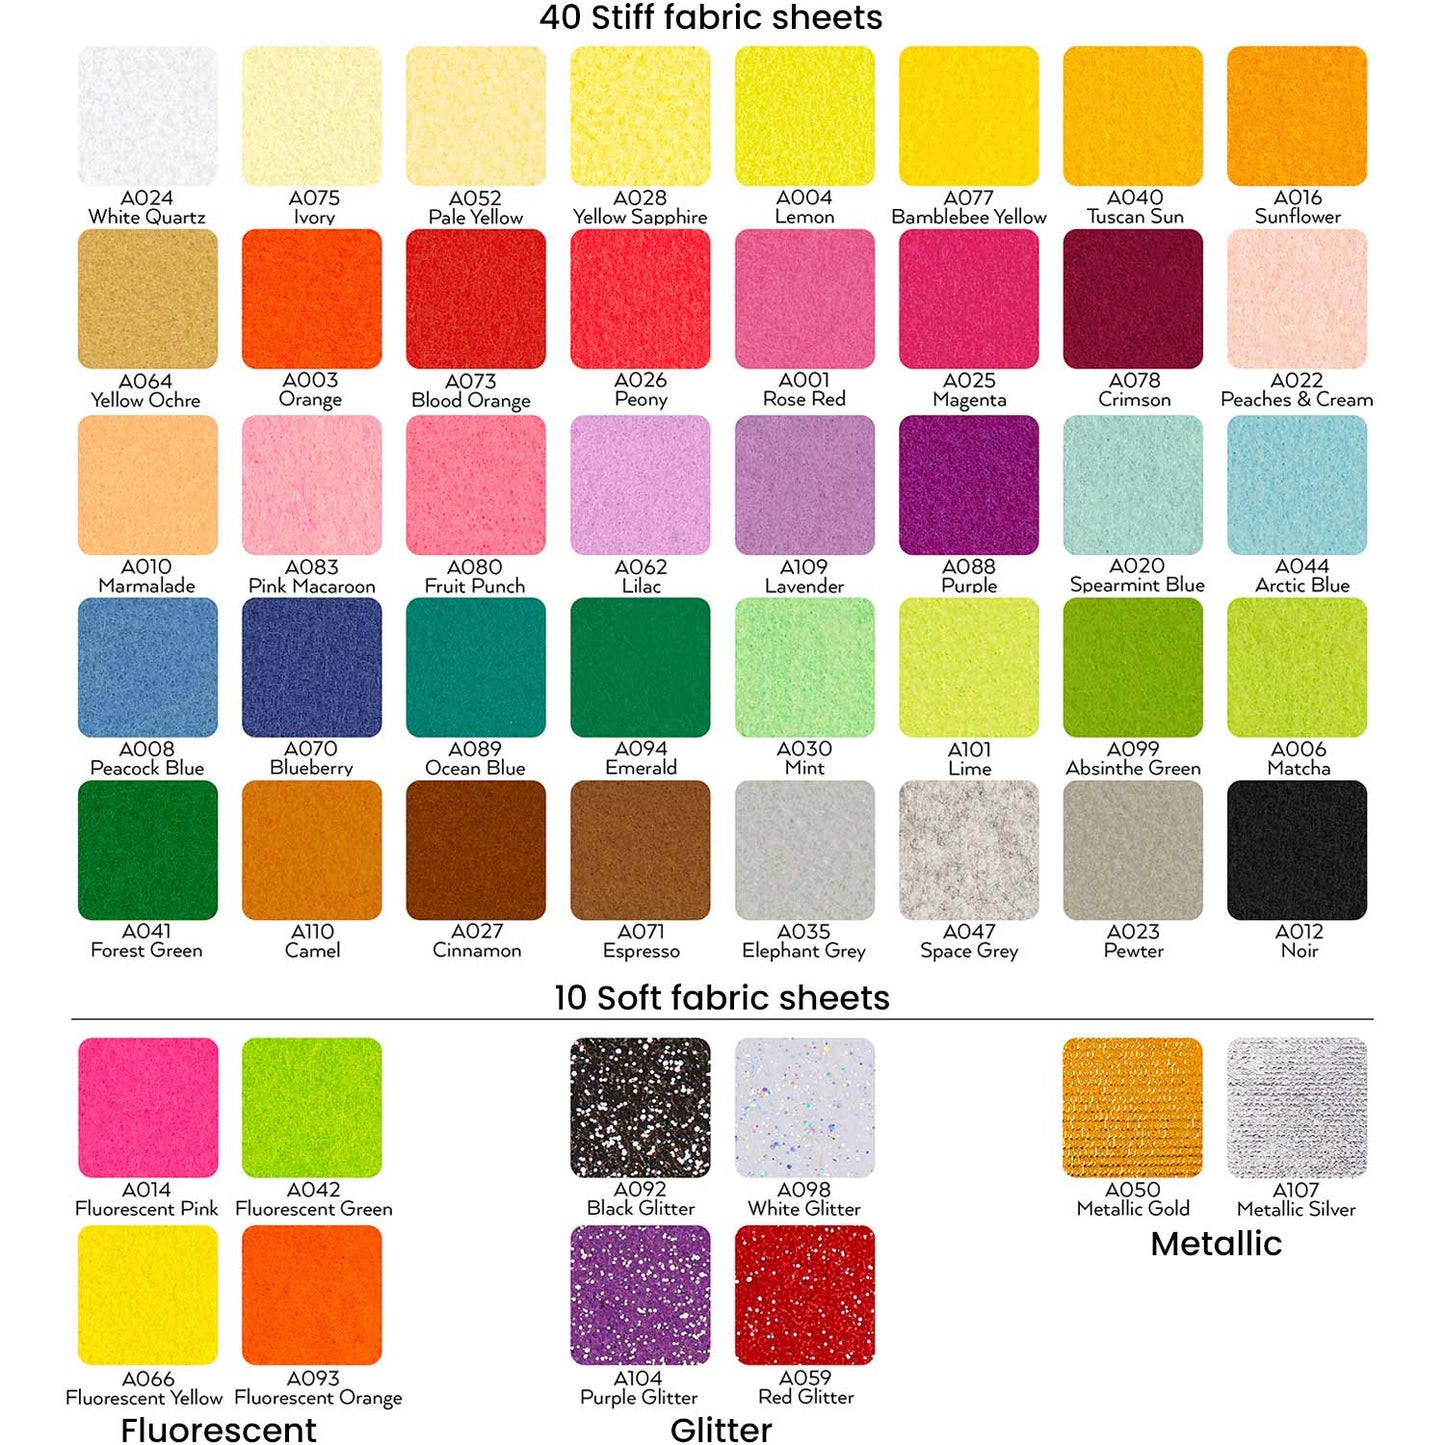 Arteza Stiff Felt Fabric, Assorted Colors, 12x14 Sheets - 50 Pack